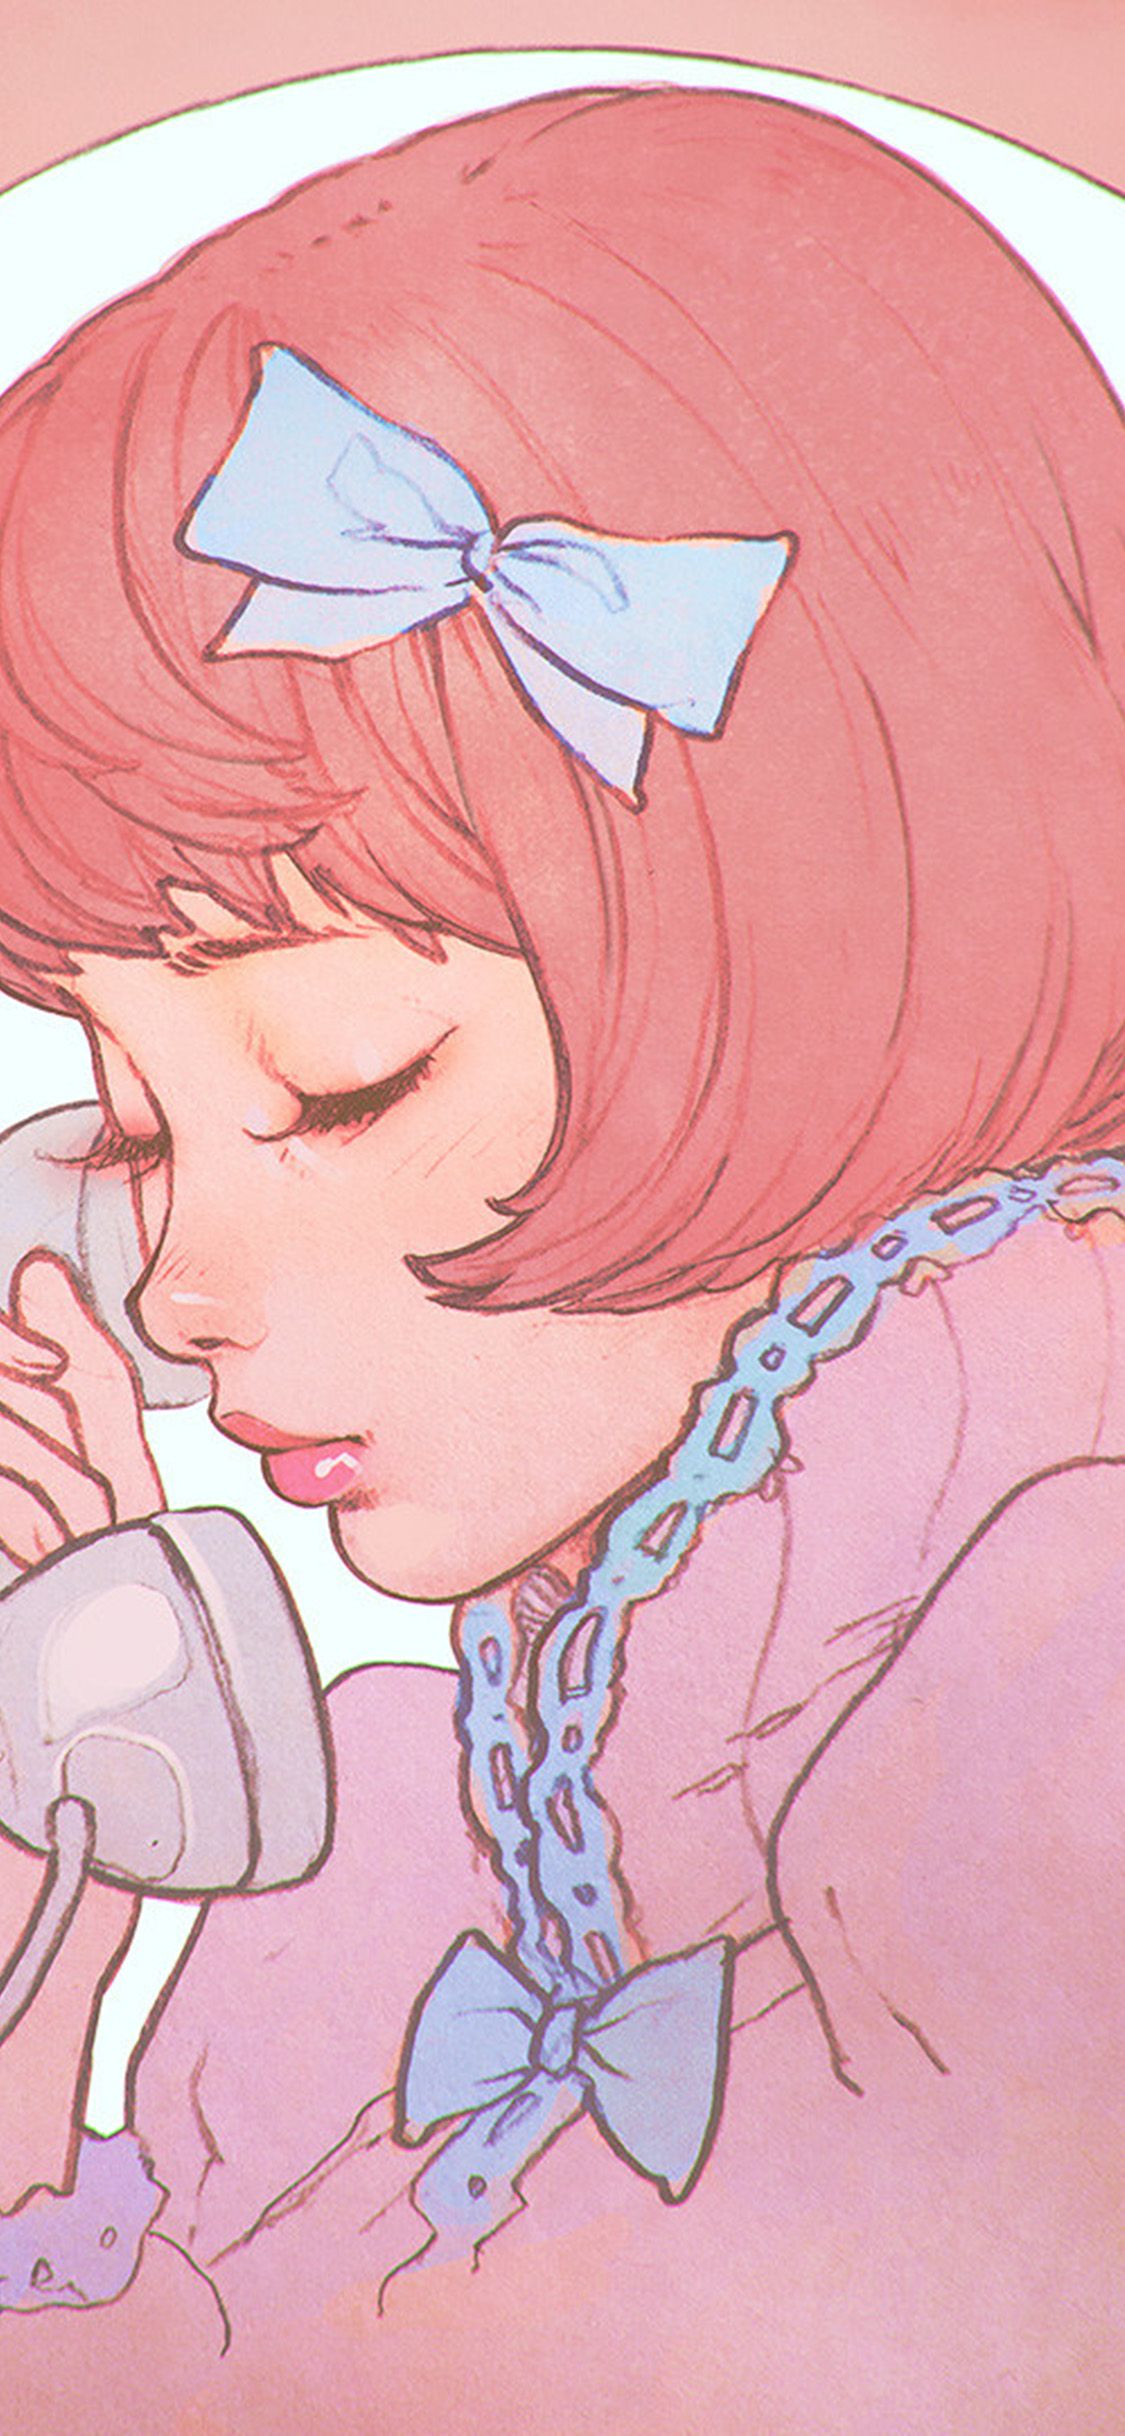 iPhone X wallpaper. pink phone girl cute anime drawing art ilya